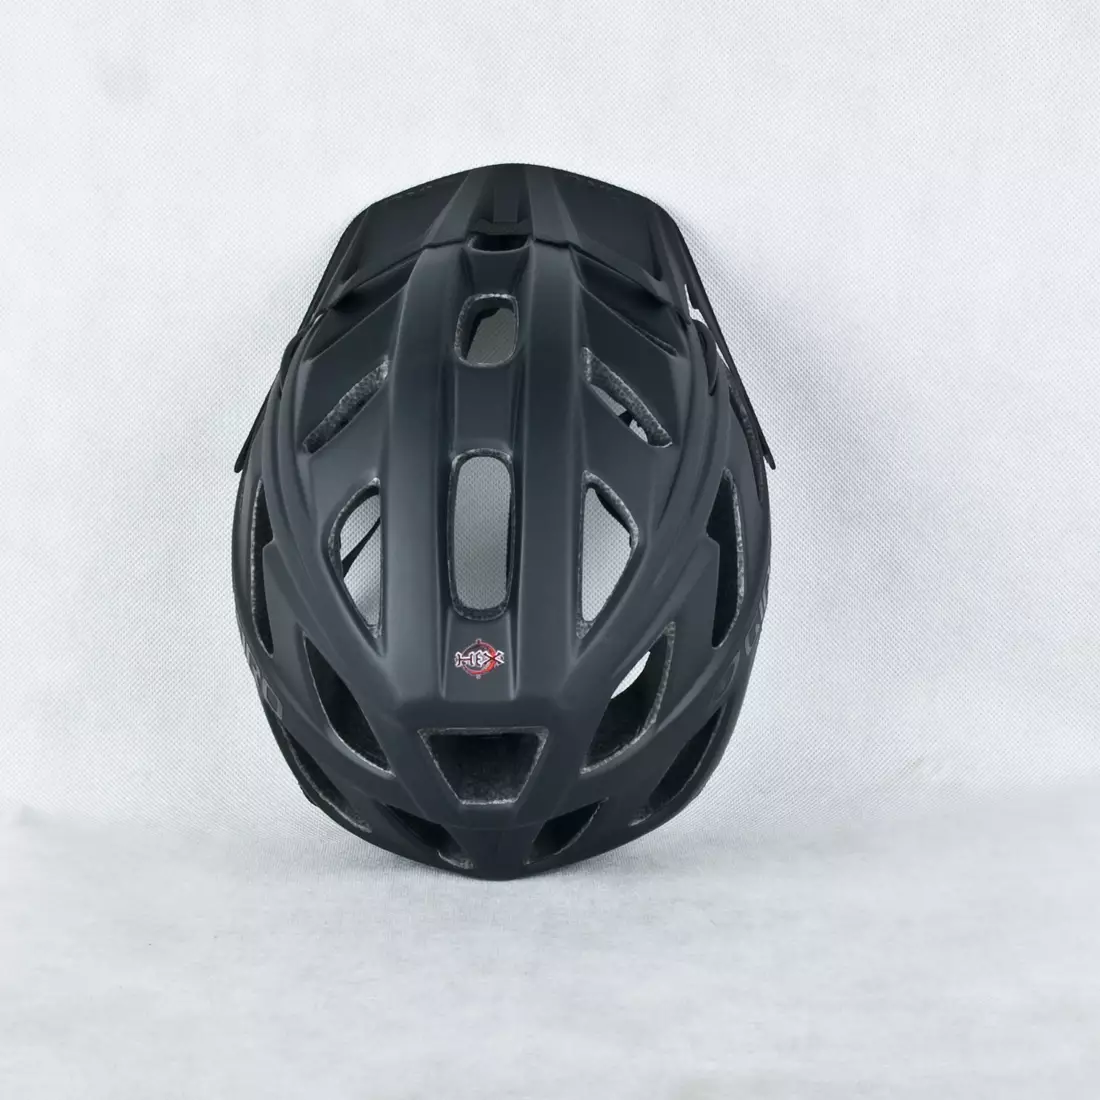 GIRO HEX - casca de bicicleta neagra mat